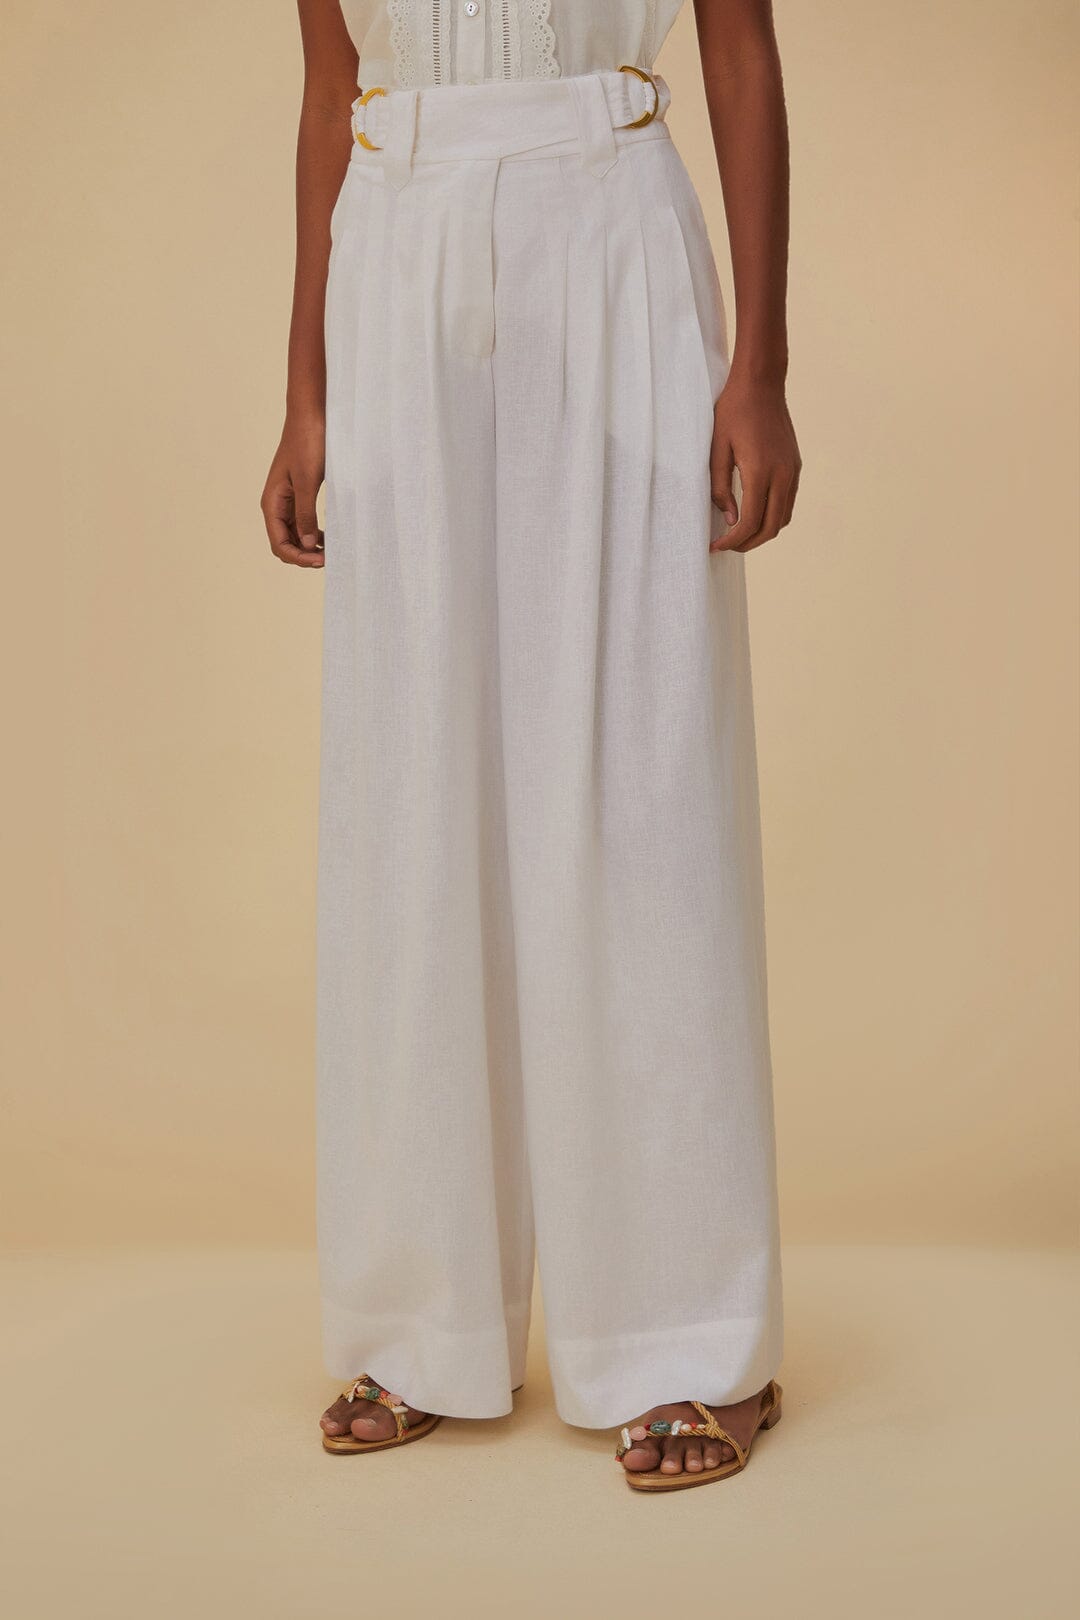 Women Cotton Linen Trousers Summer Casual Elastic Waist Straight Bottoms  Pants | eBay